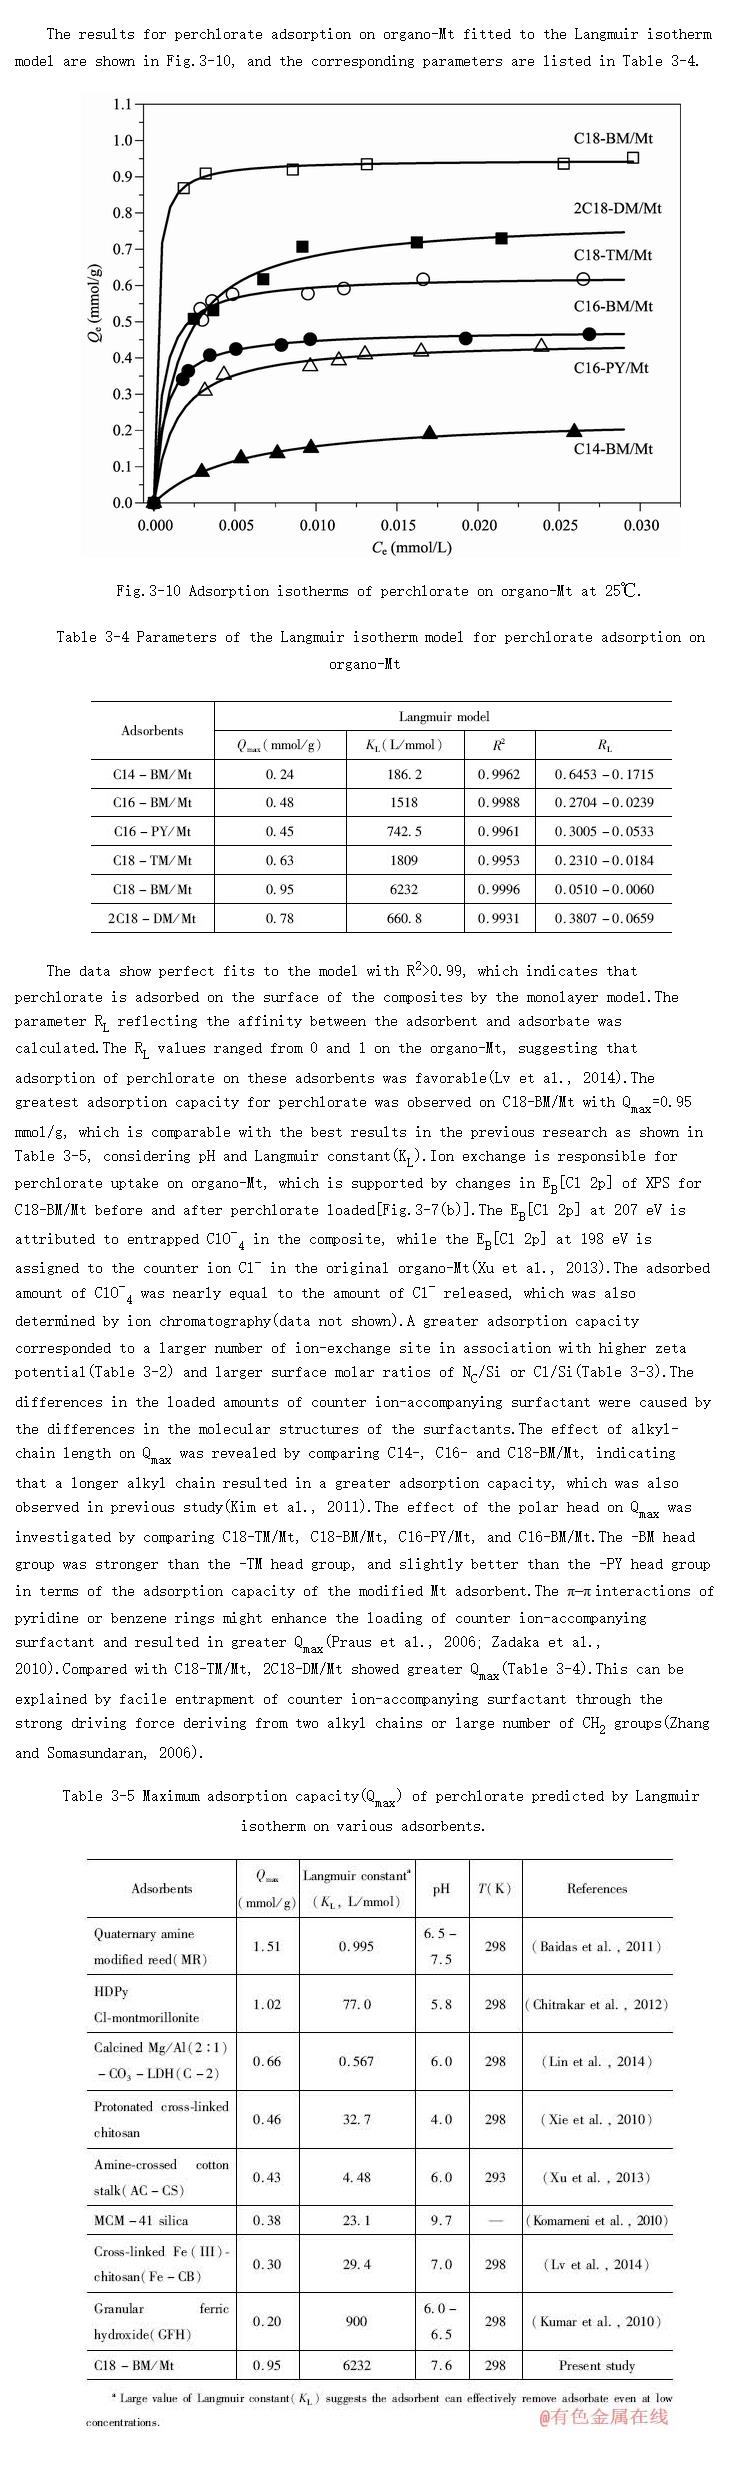 Adsorption capacity of perchlorate on organo-montmorillonites